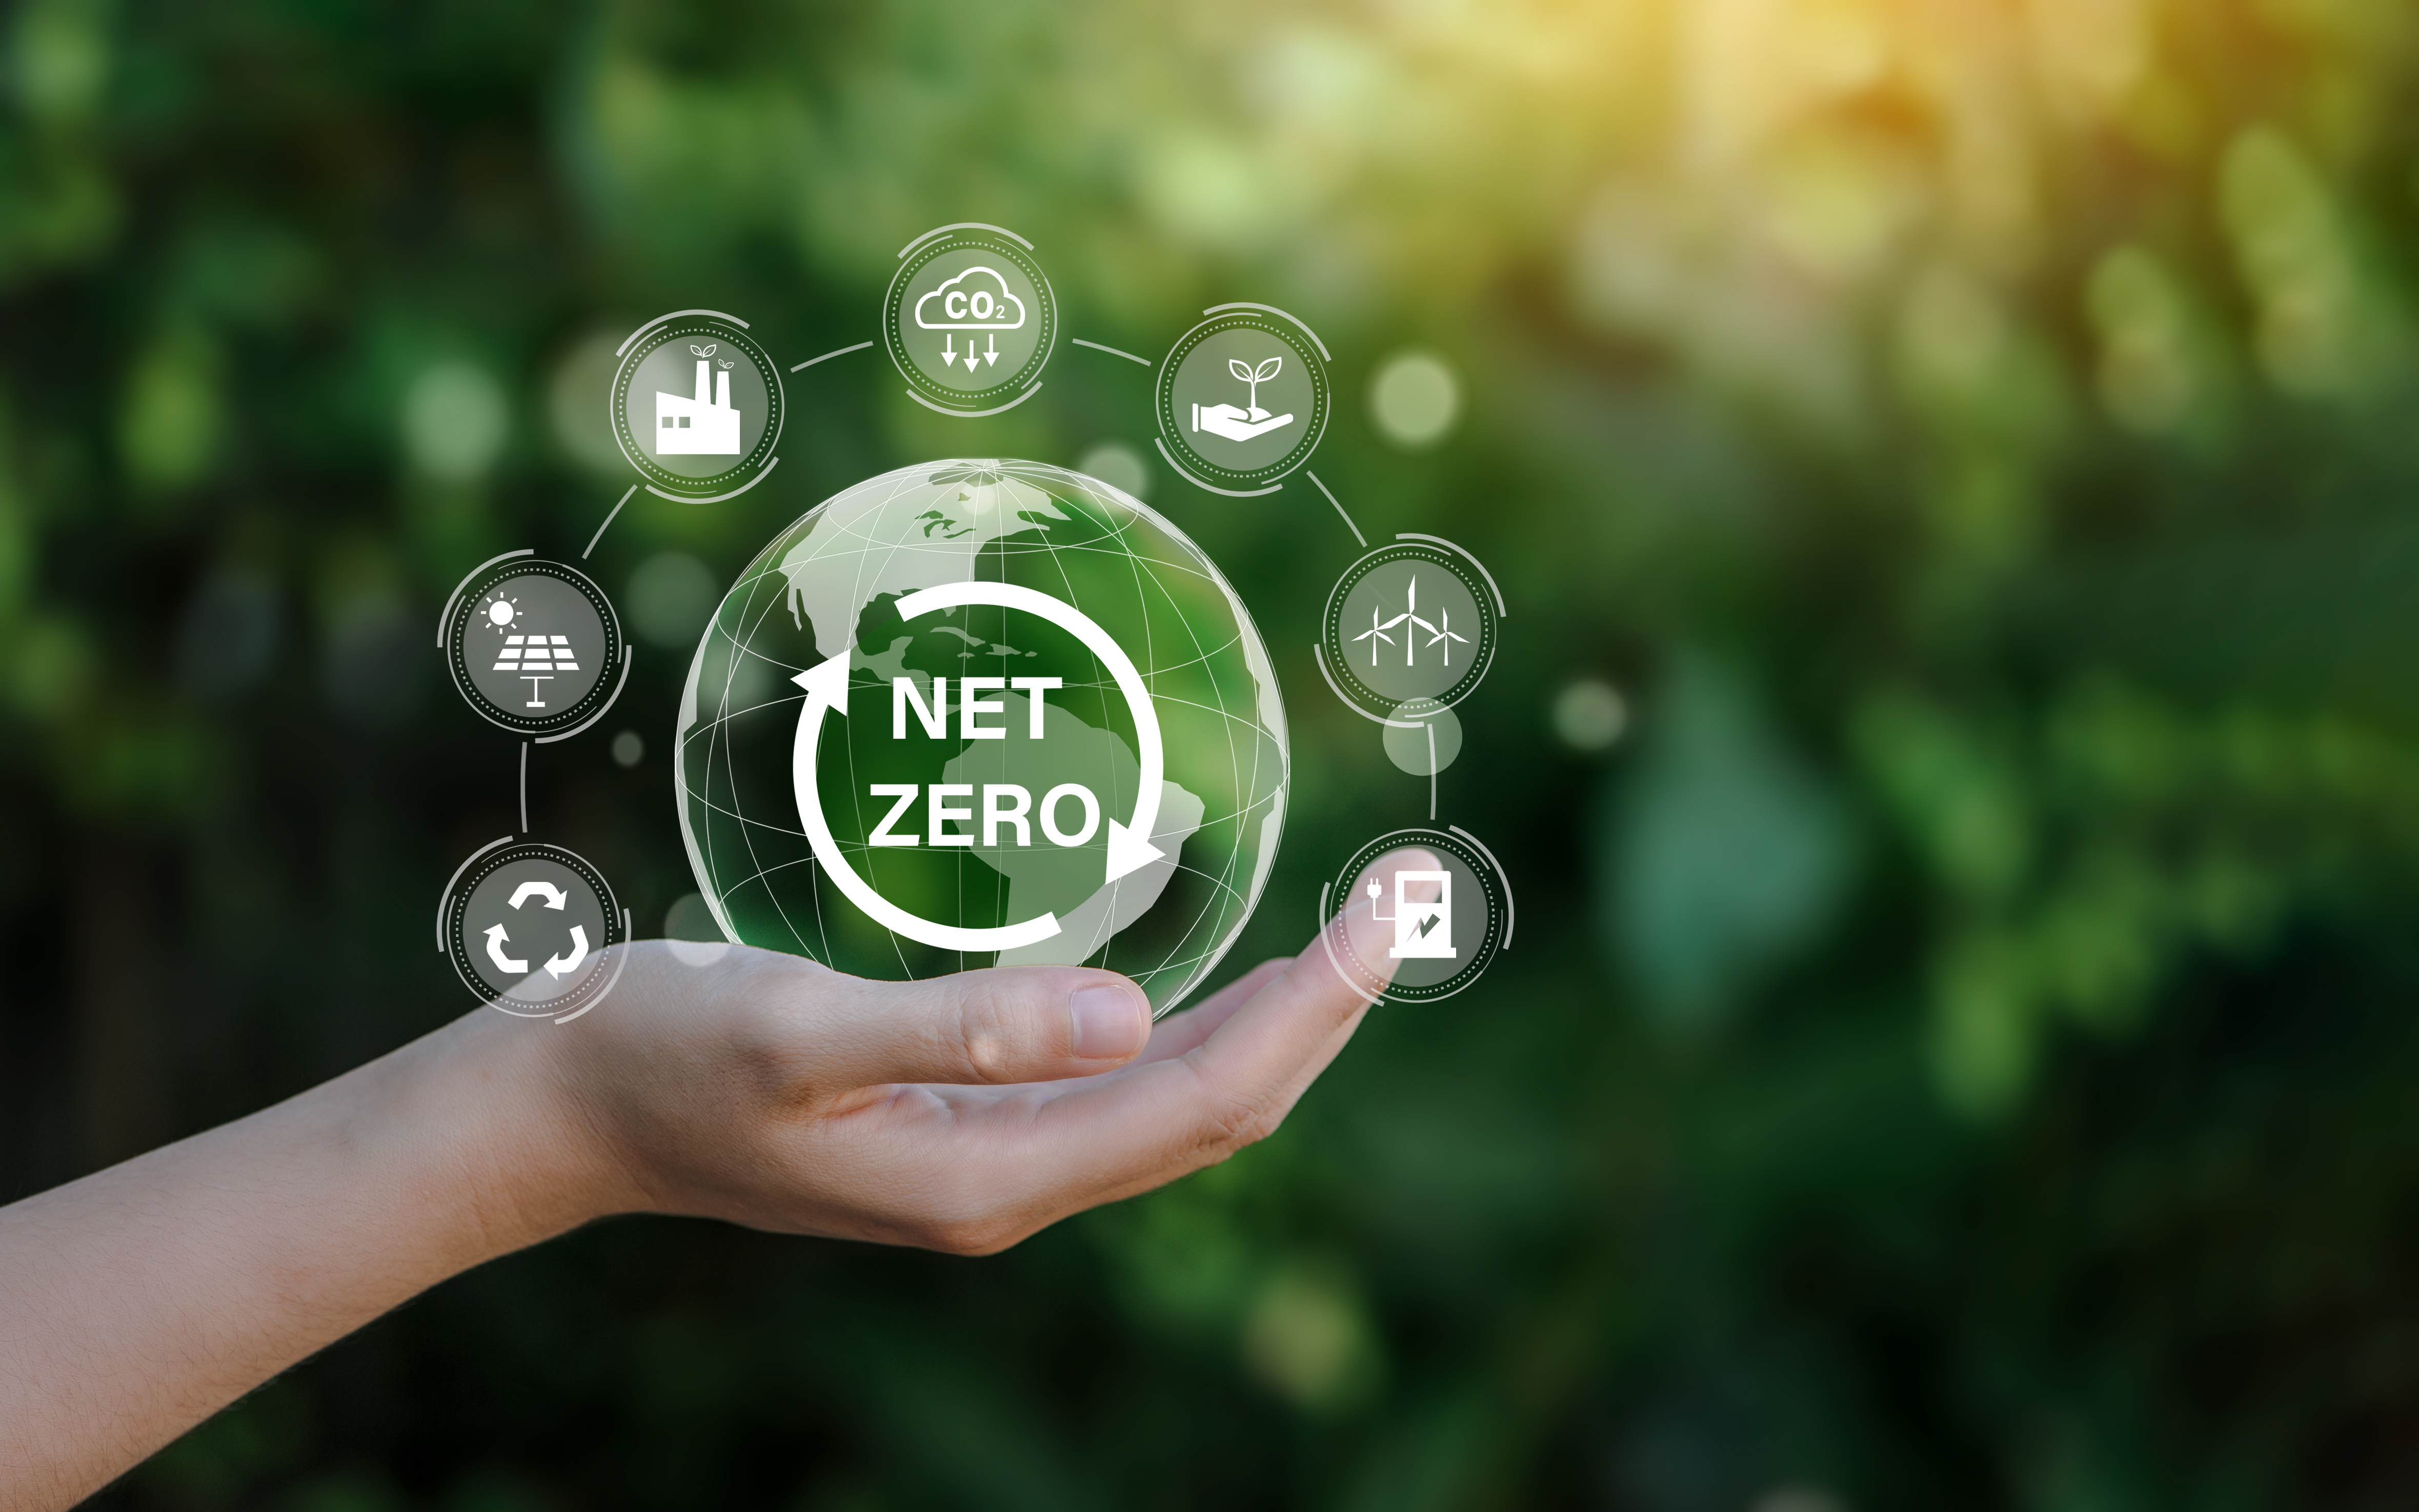 Net Zero logo surrounded by images of green energy symbols 